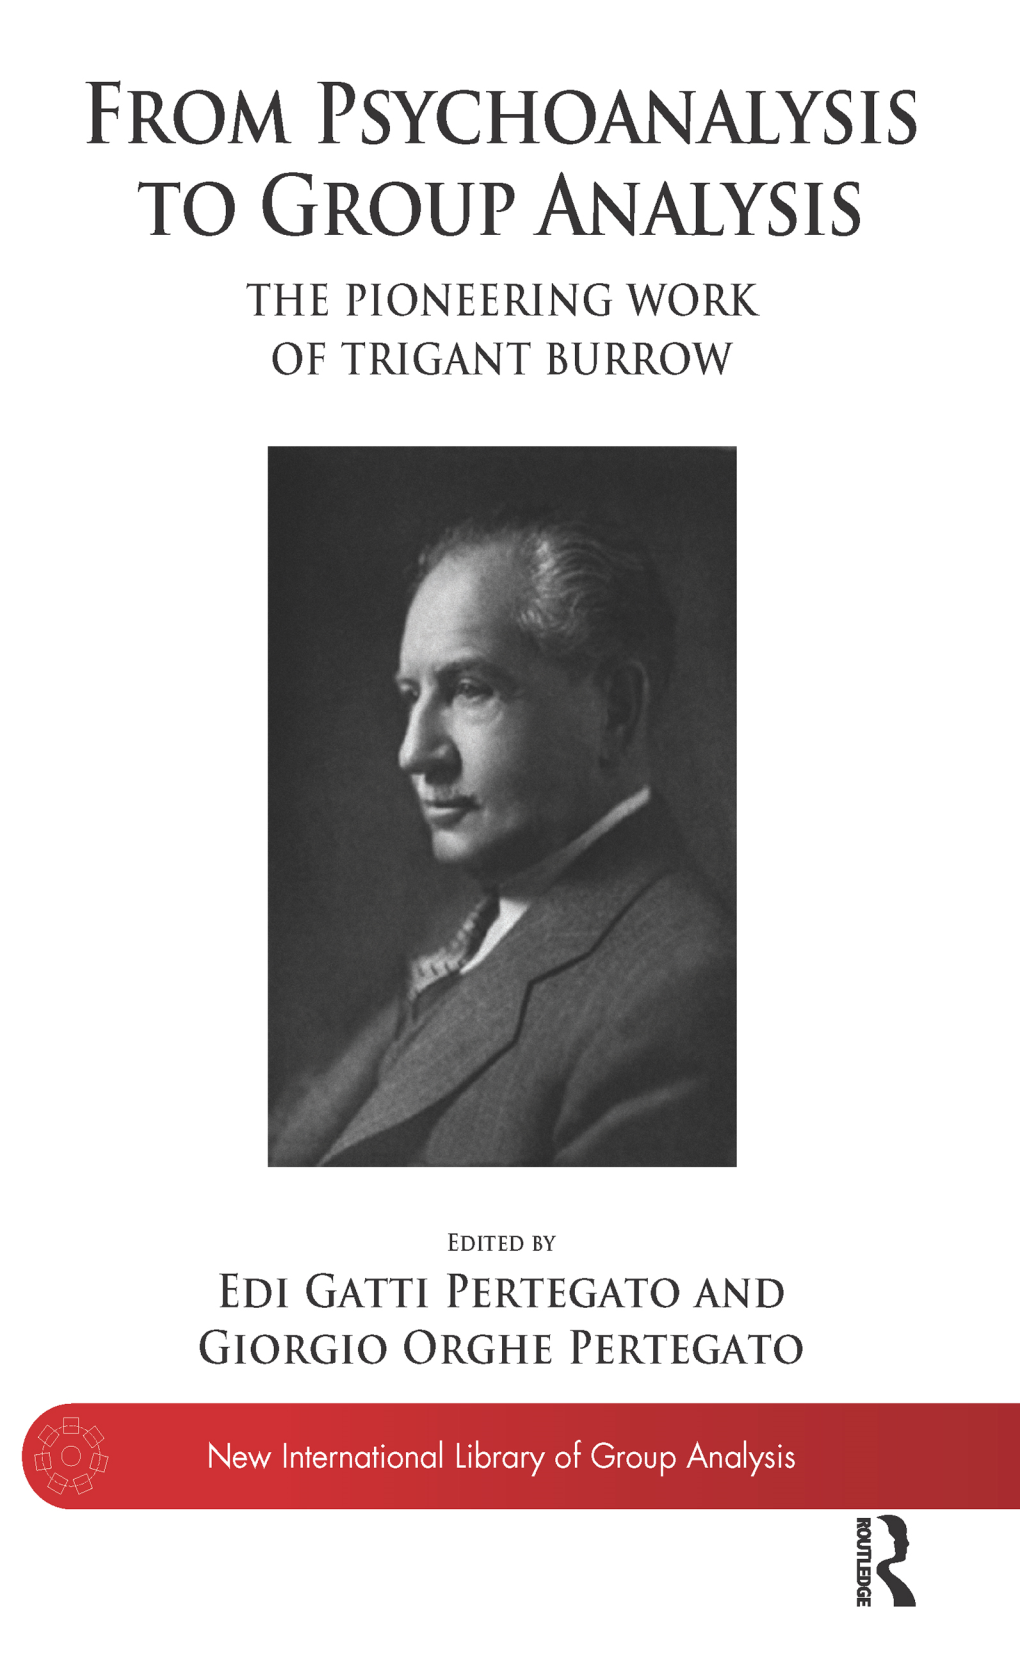 The Pioneering Work of Trigant Burrow